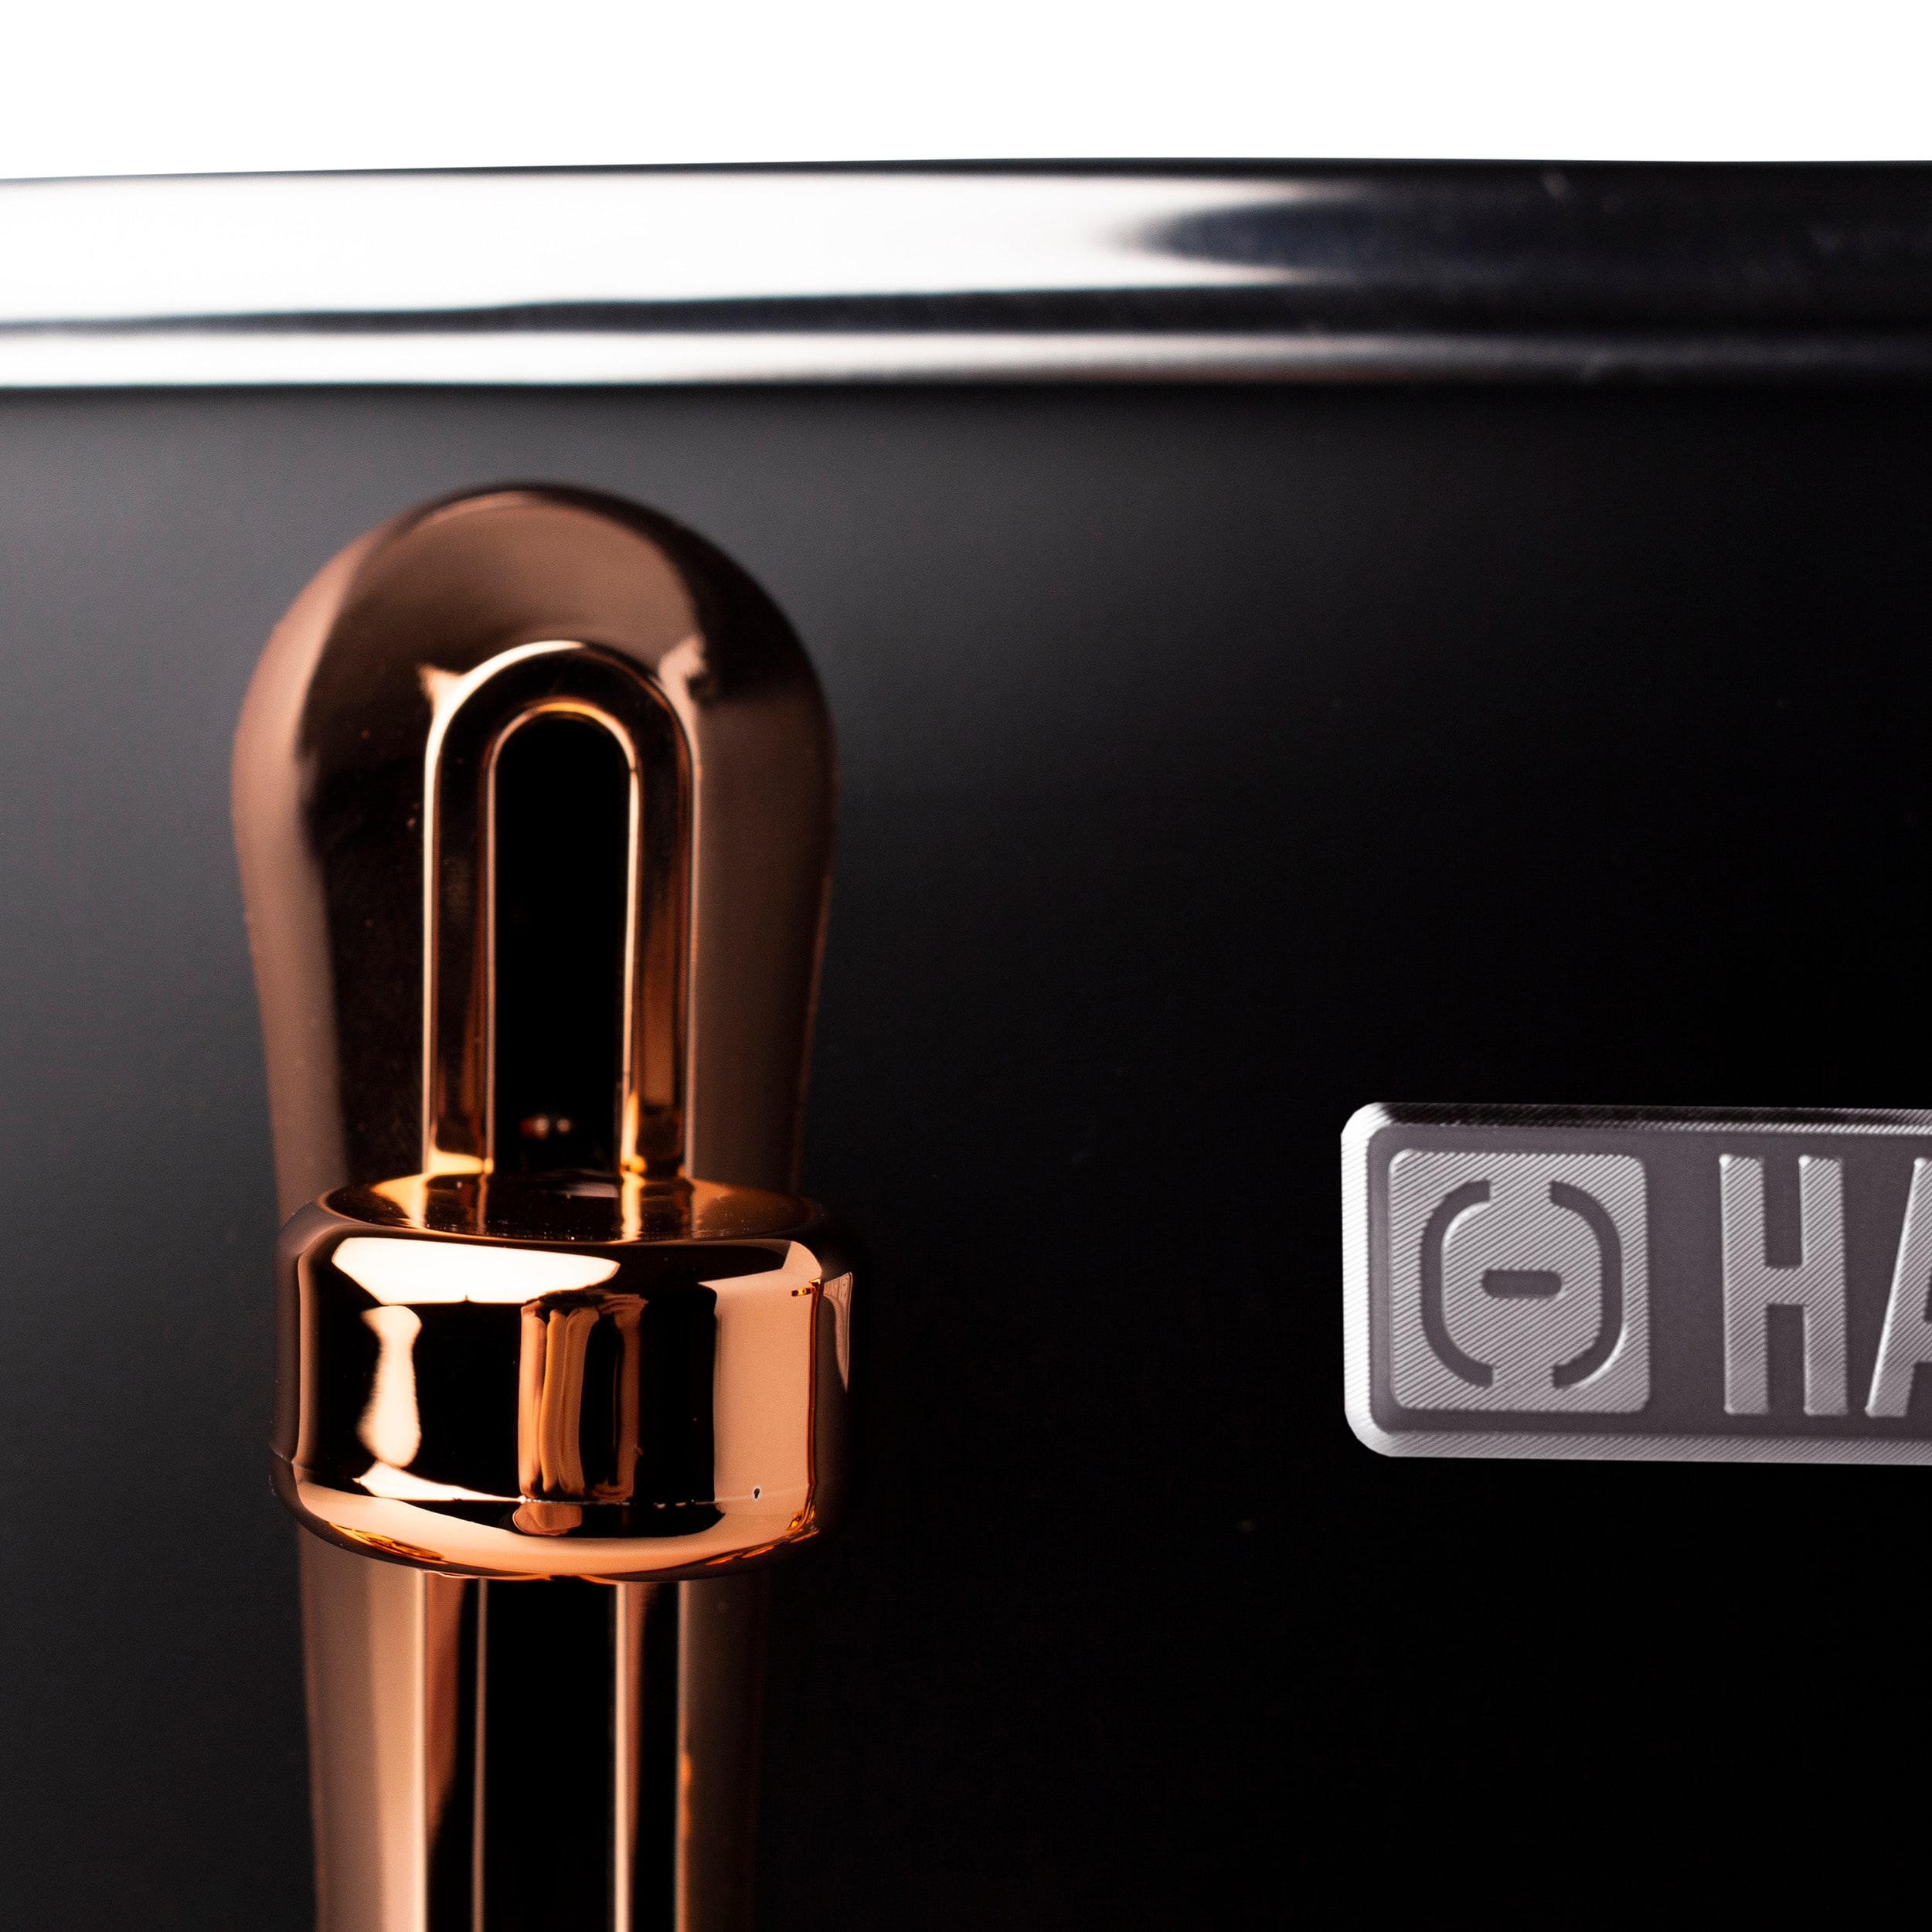 Haden Heritage Retro Wide Slot 4-slice Toaster - Bed Bath & Beyond -  29628628